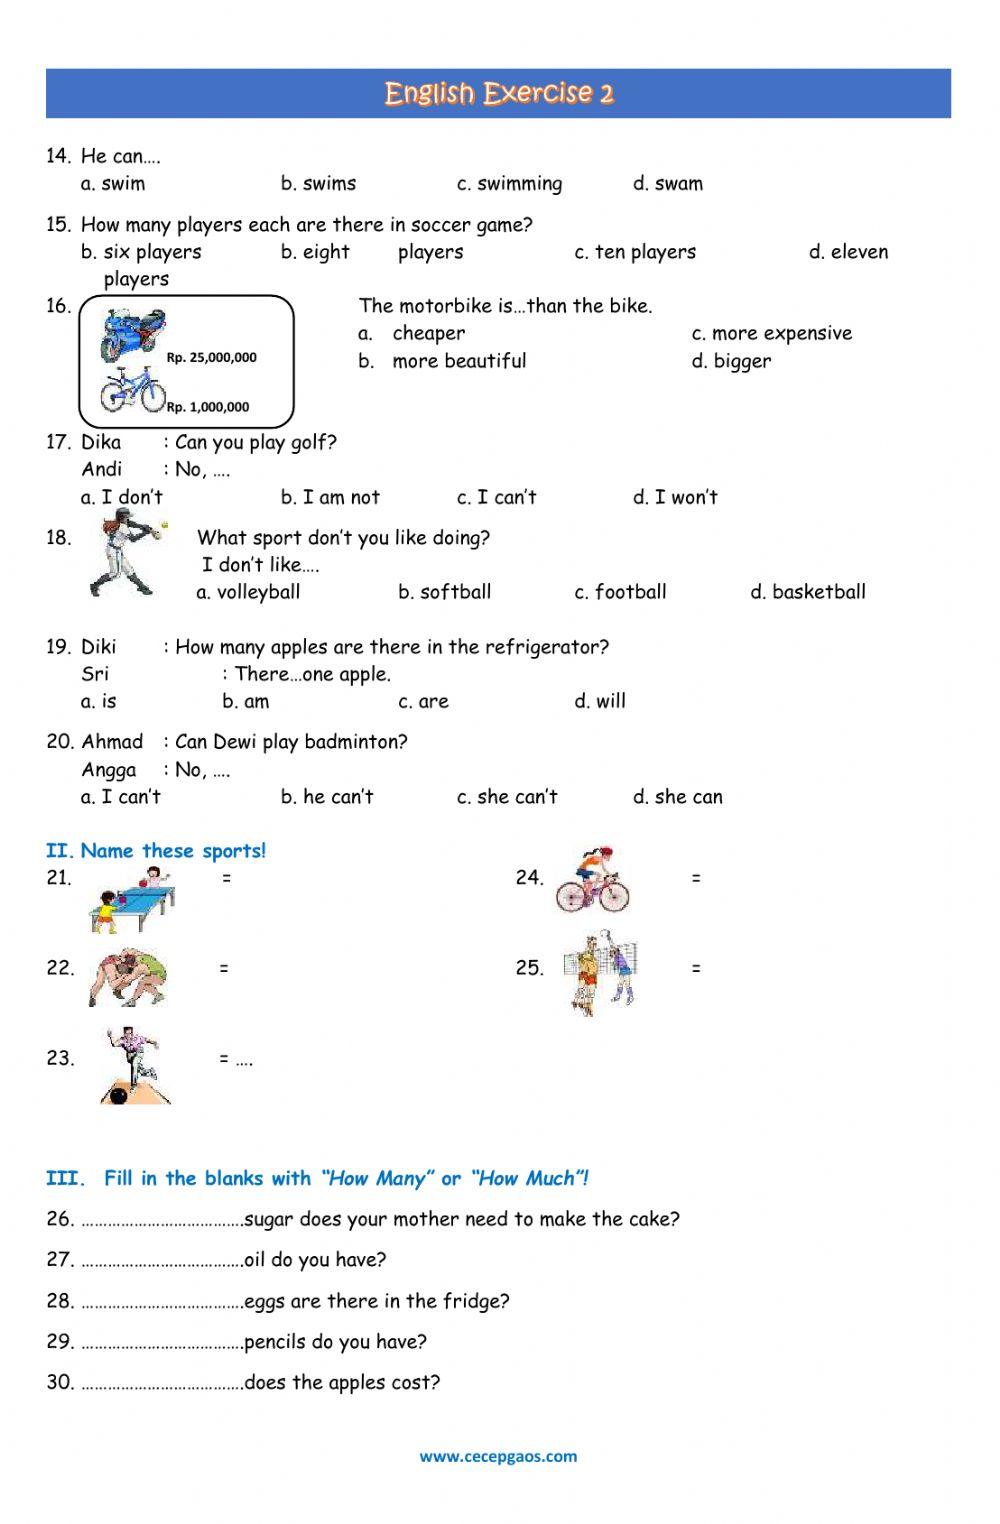 Interactive Worksheet English Exercise 2 Grade 6 Semester 1